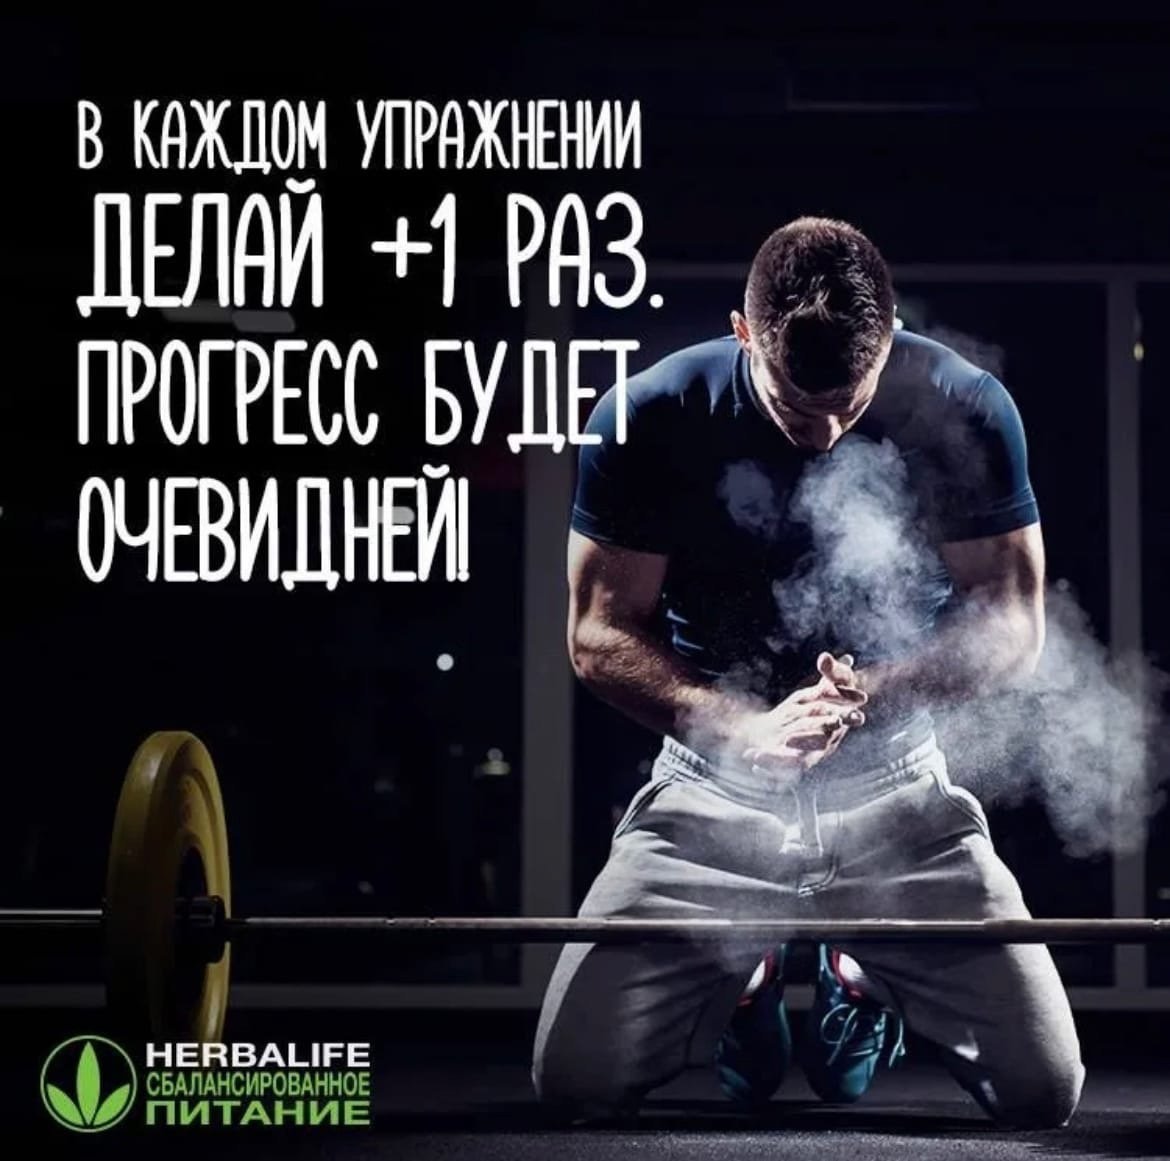 Спорт мотивация русско. Мотивационные картинки. Спорт мотивация. Мотивационные плакаты спортивные. Плакат спорт мотивация.